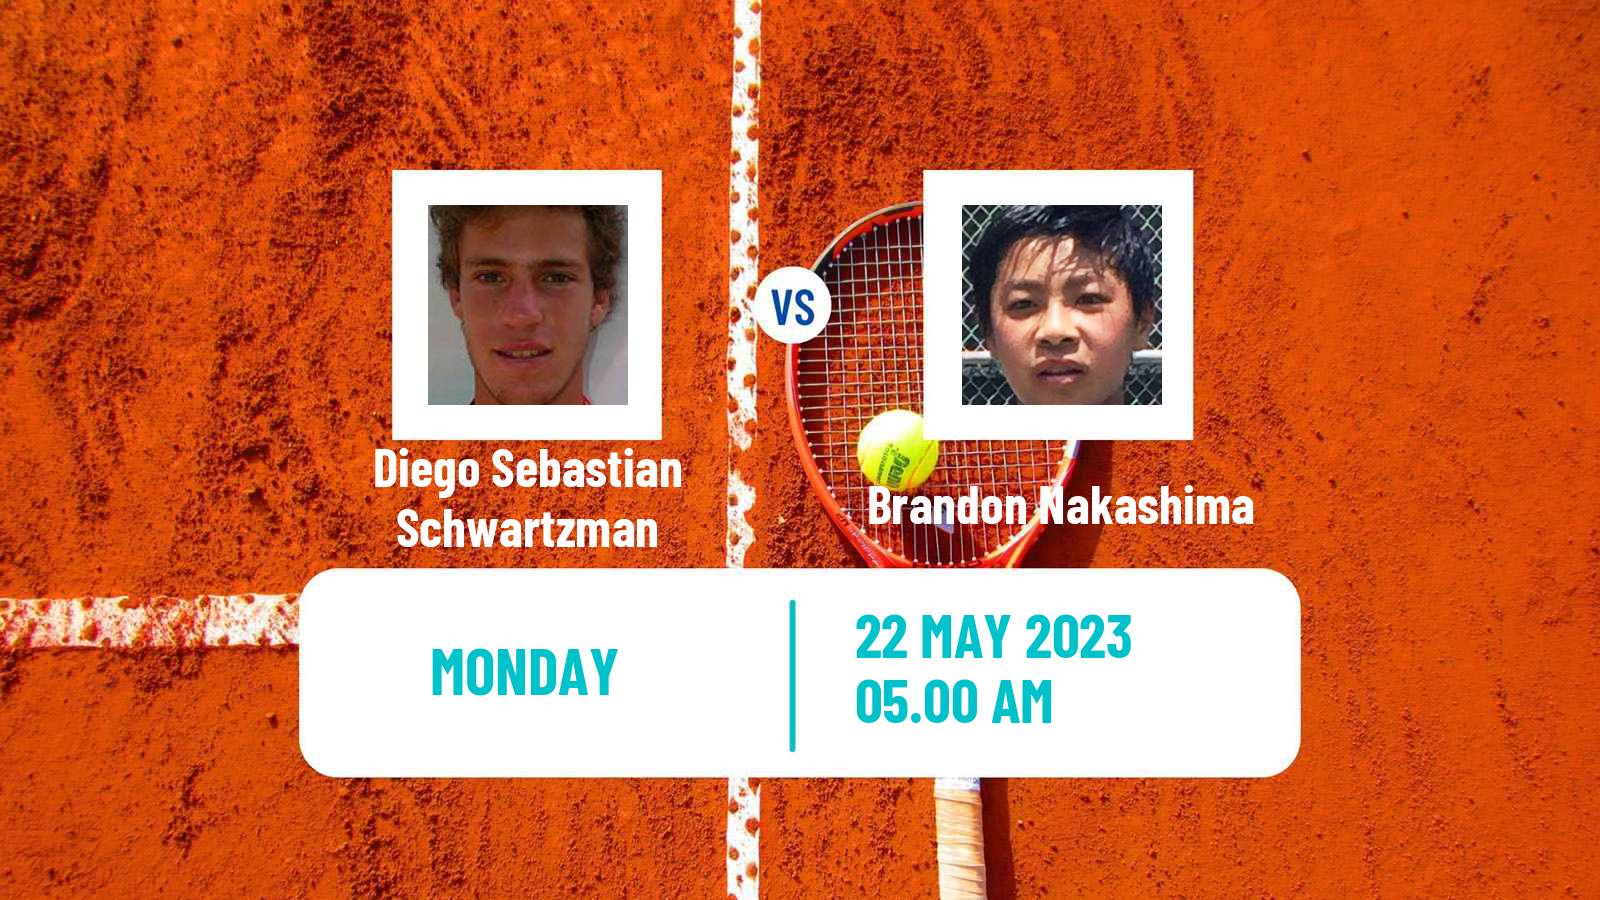 Tennis ATP Lyon Diego Sebastian Schwartzman - Brandon Nakashima